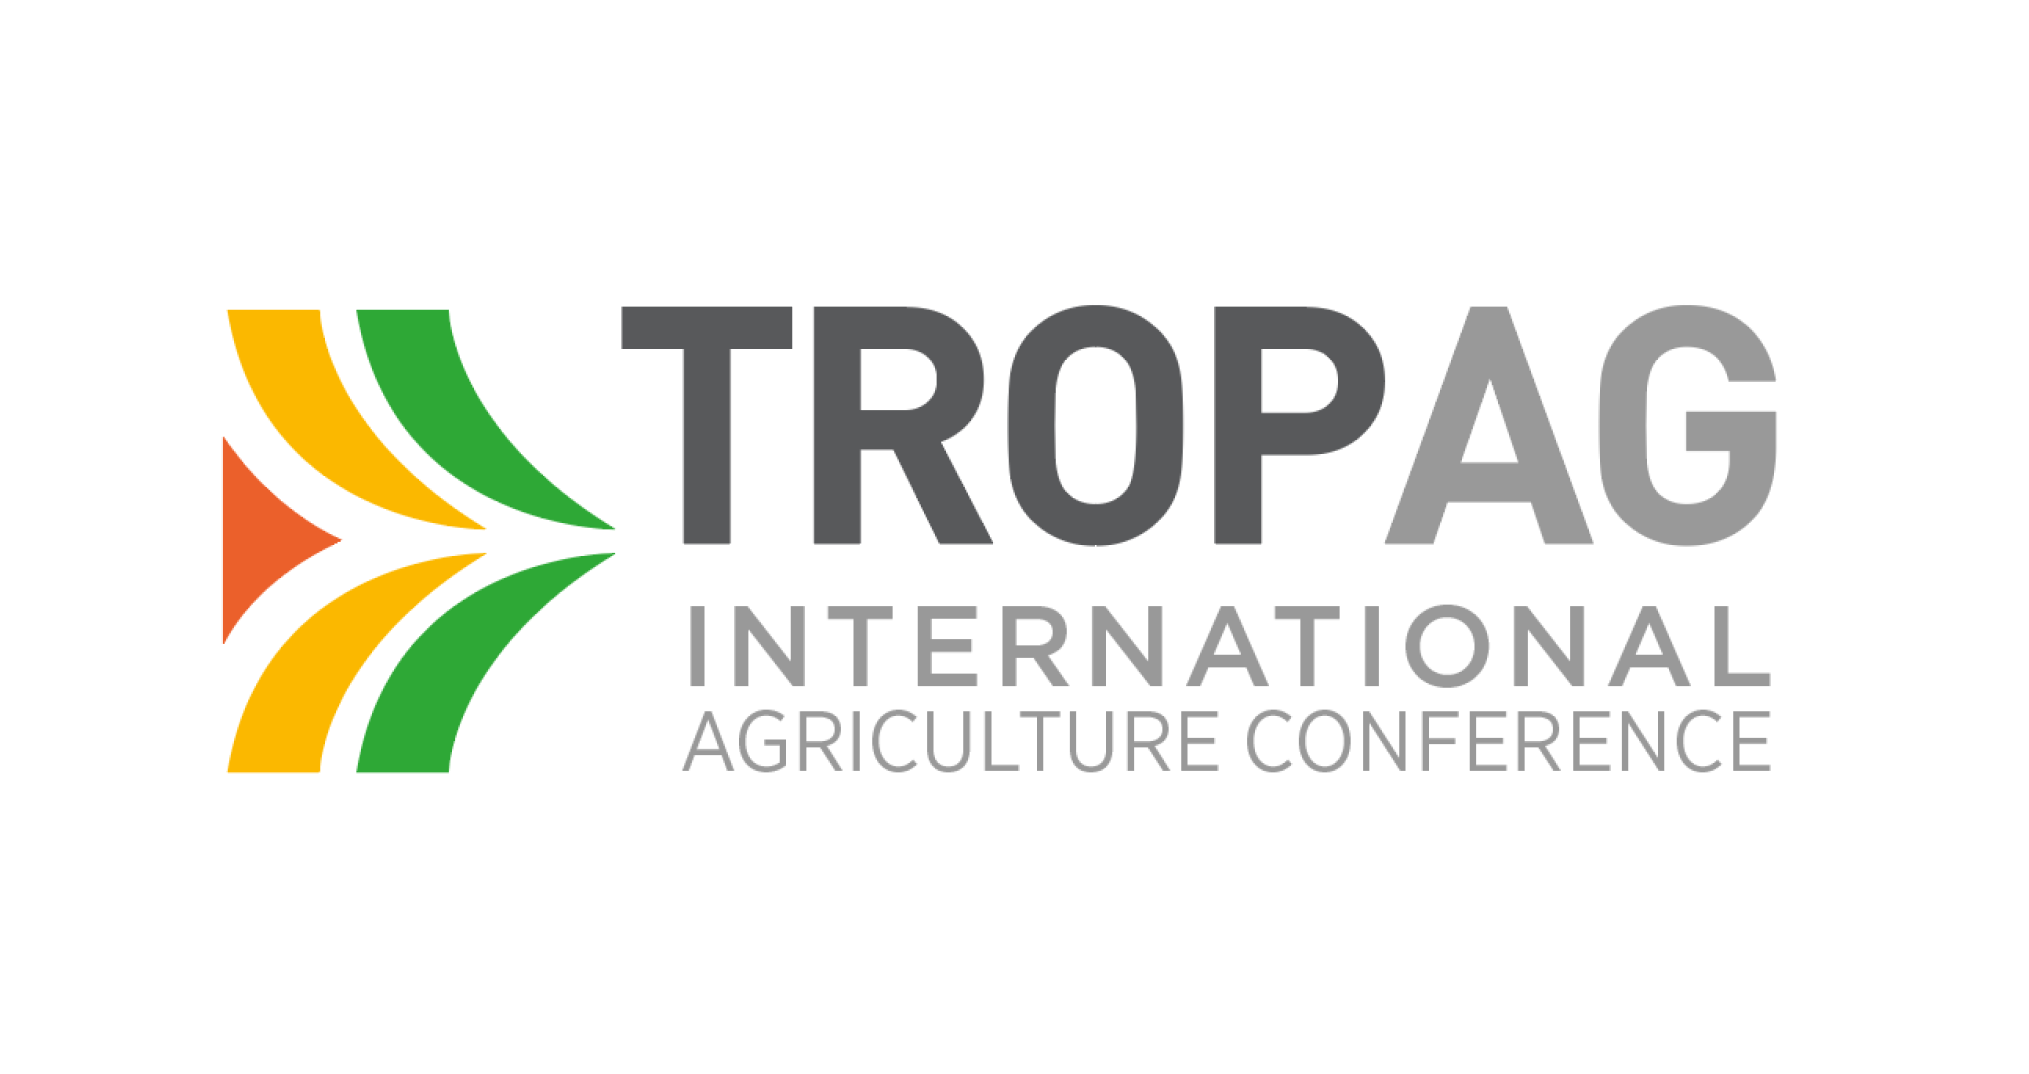 TropAg logo